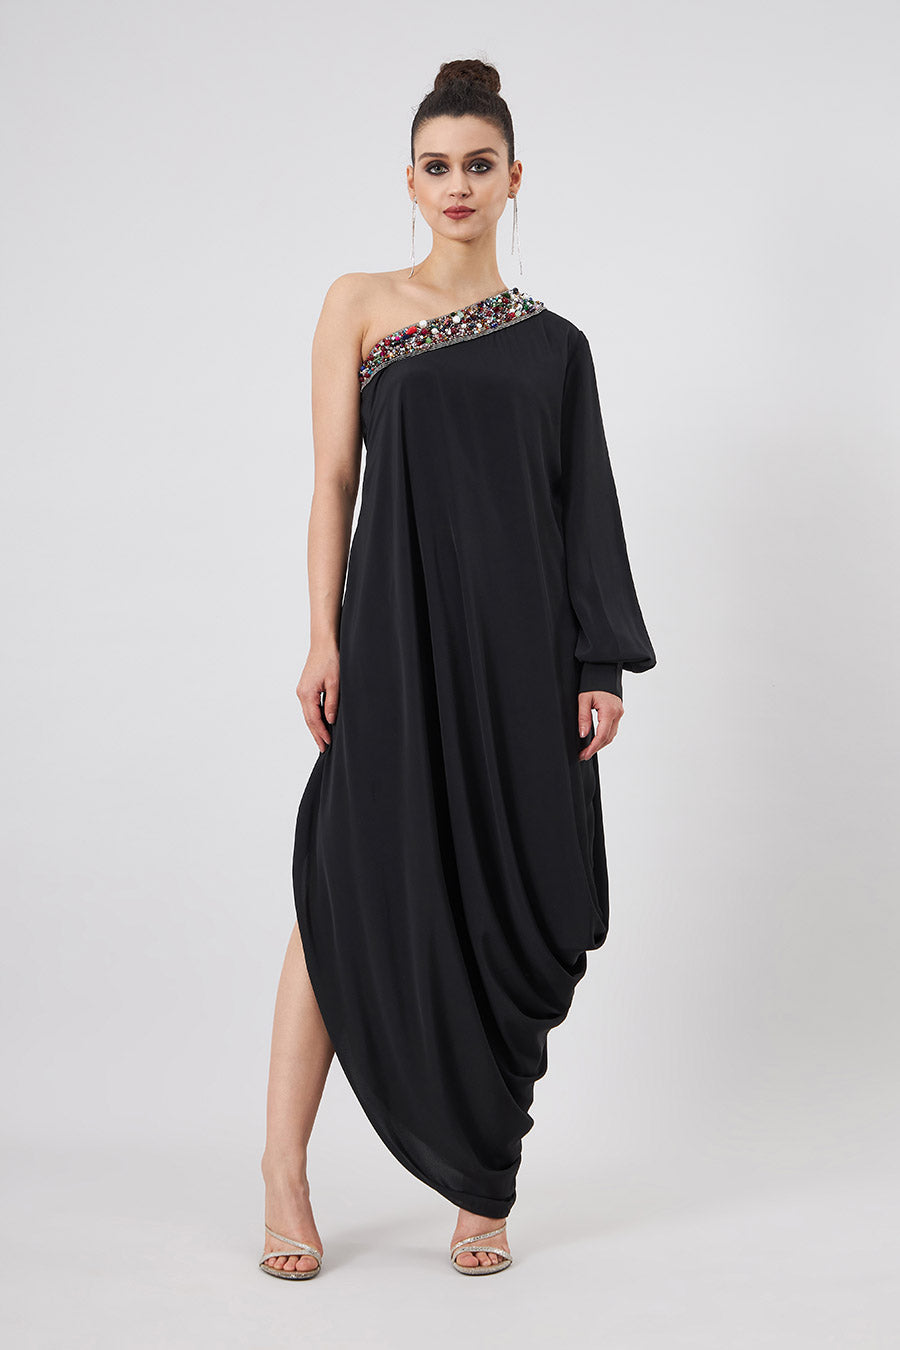 Black Embellished Cowl Draped Dress